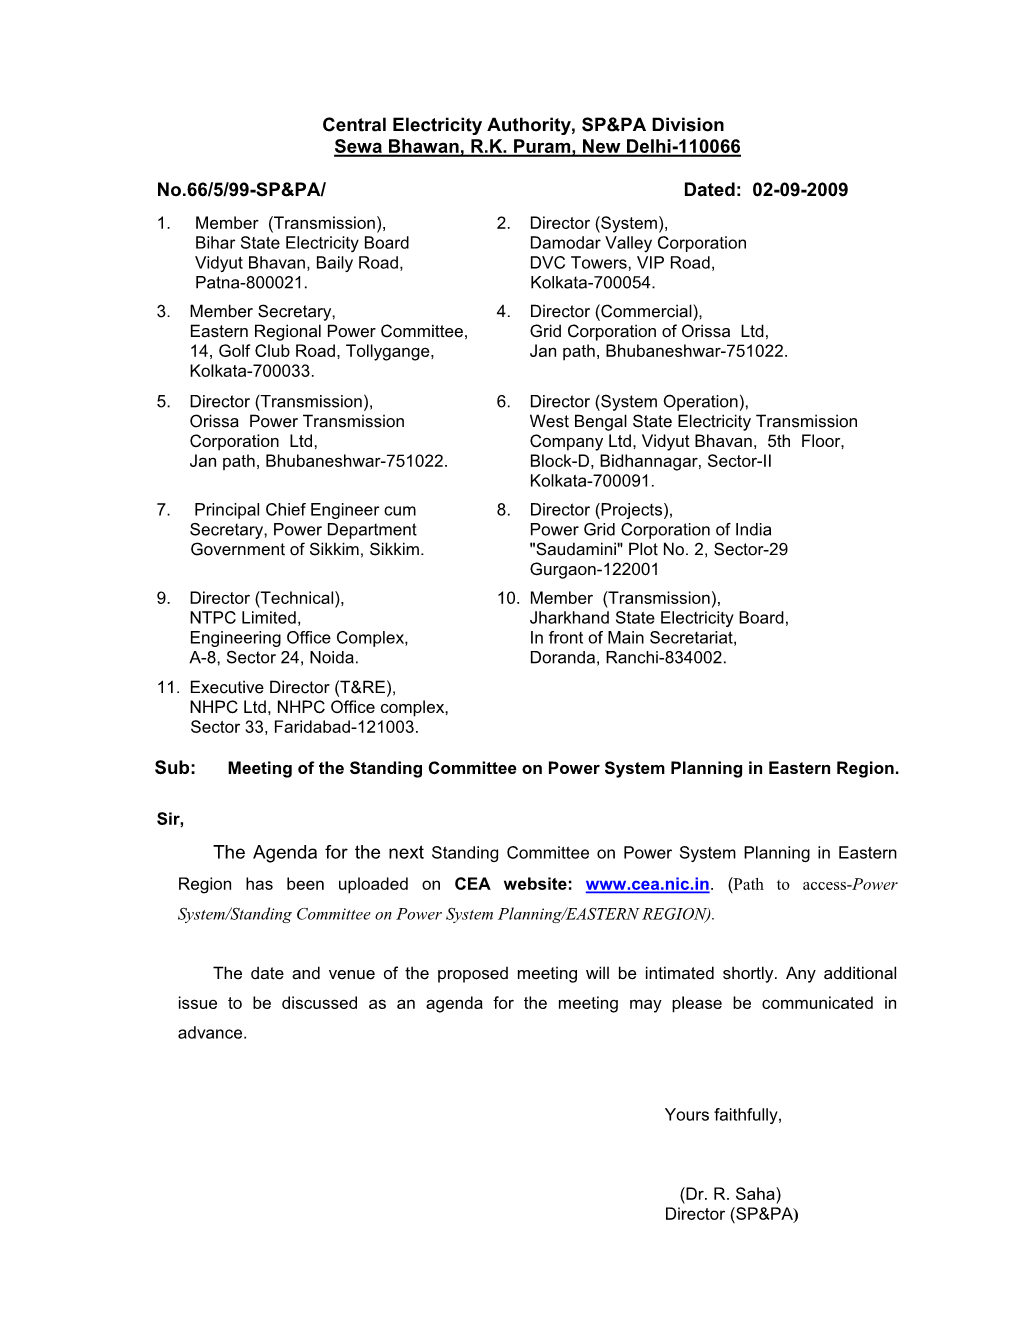 Agenda Note for Standing Committee Meeting of Eastern Region